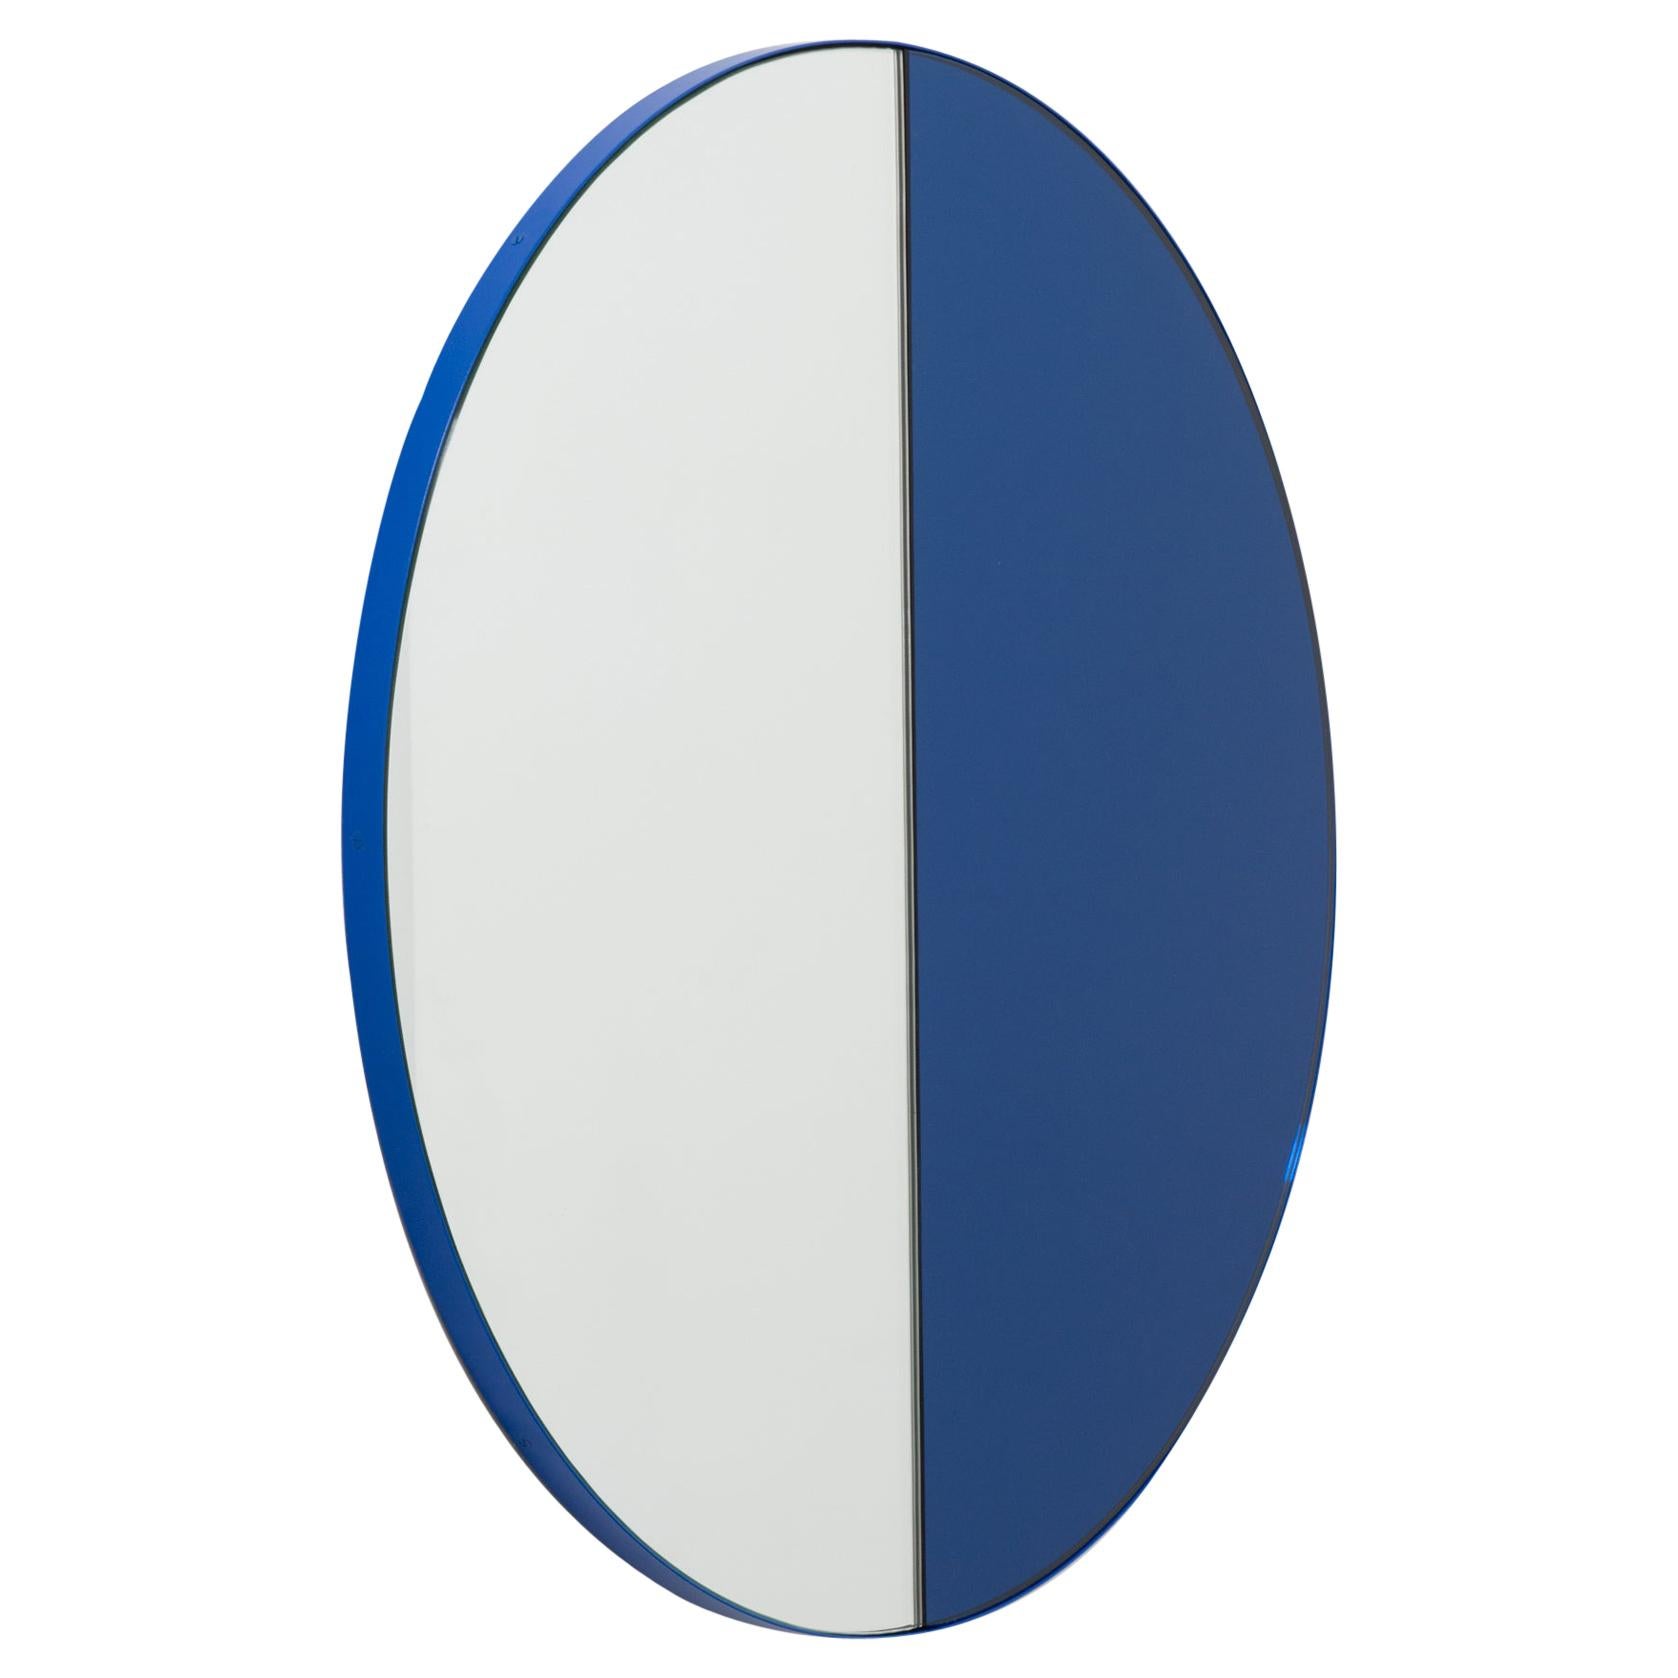 Miroir rond moderne teinté bleu mélangé Orbis Dualis avec cadre bleu, XL